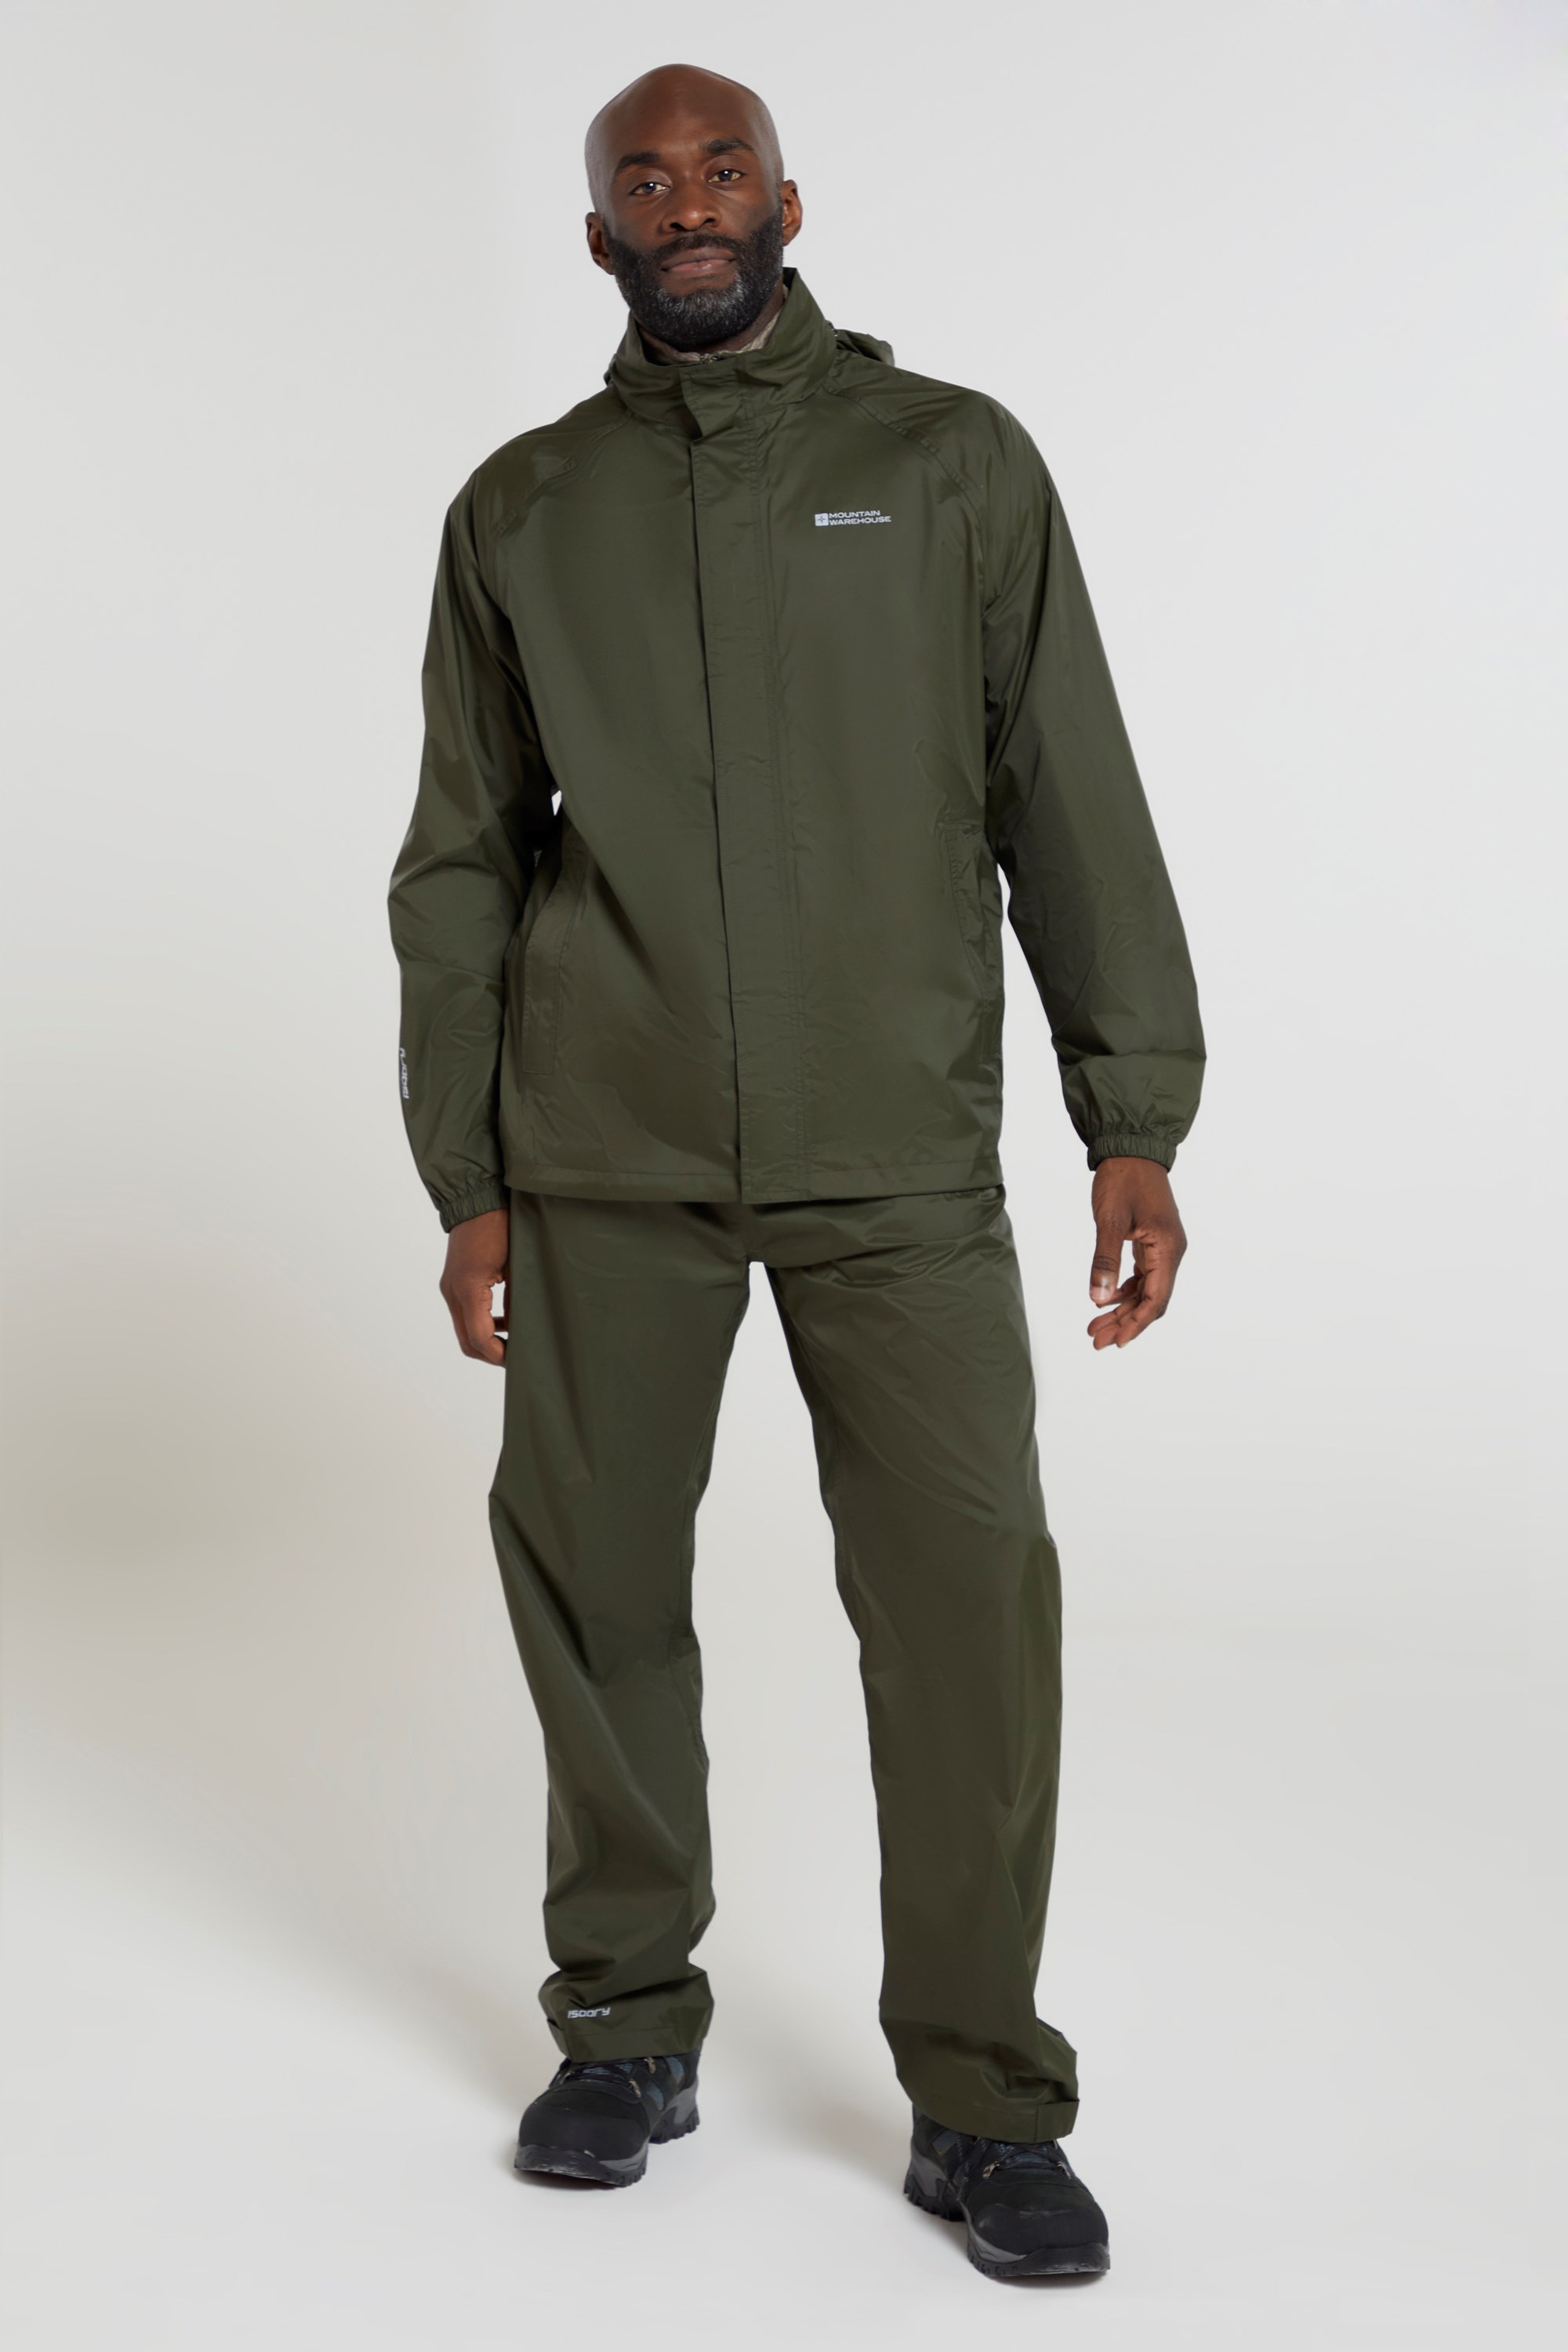 Columbia Sportswear Co Mens Teal Rain Suit Hooded Jacket XL & Pants Size L  | eBay